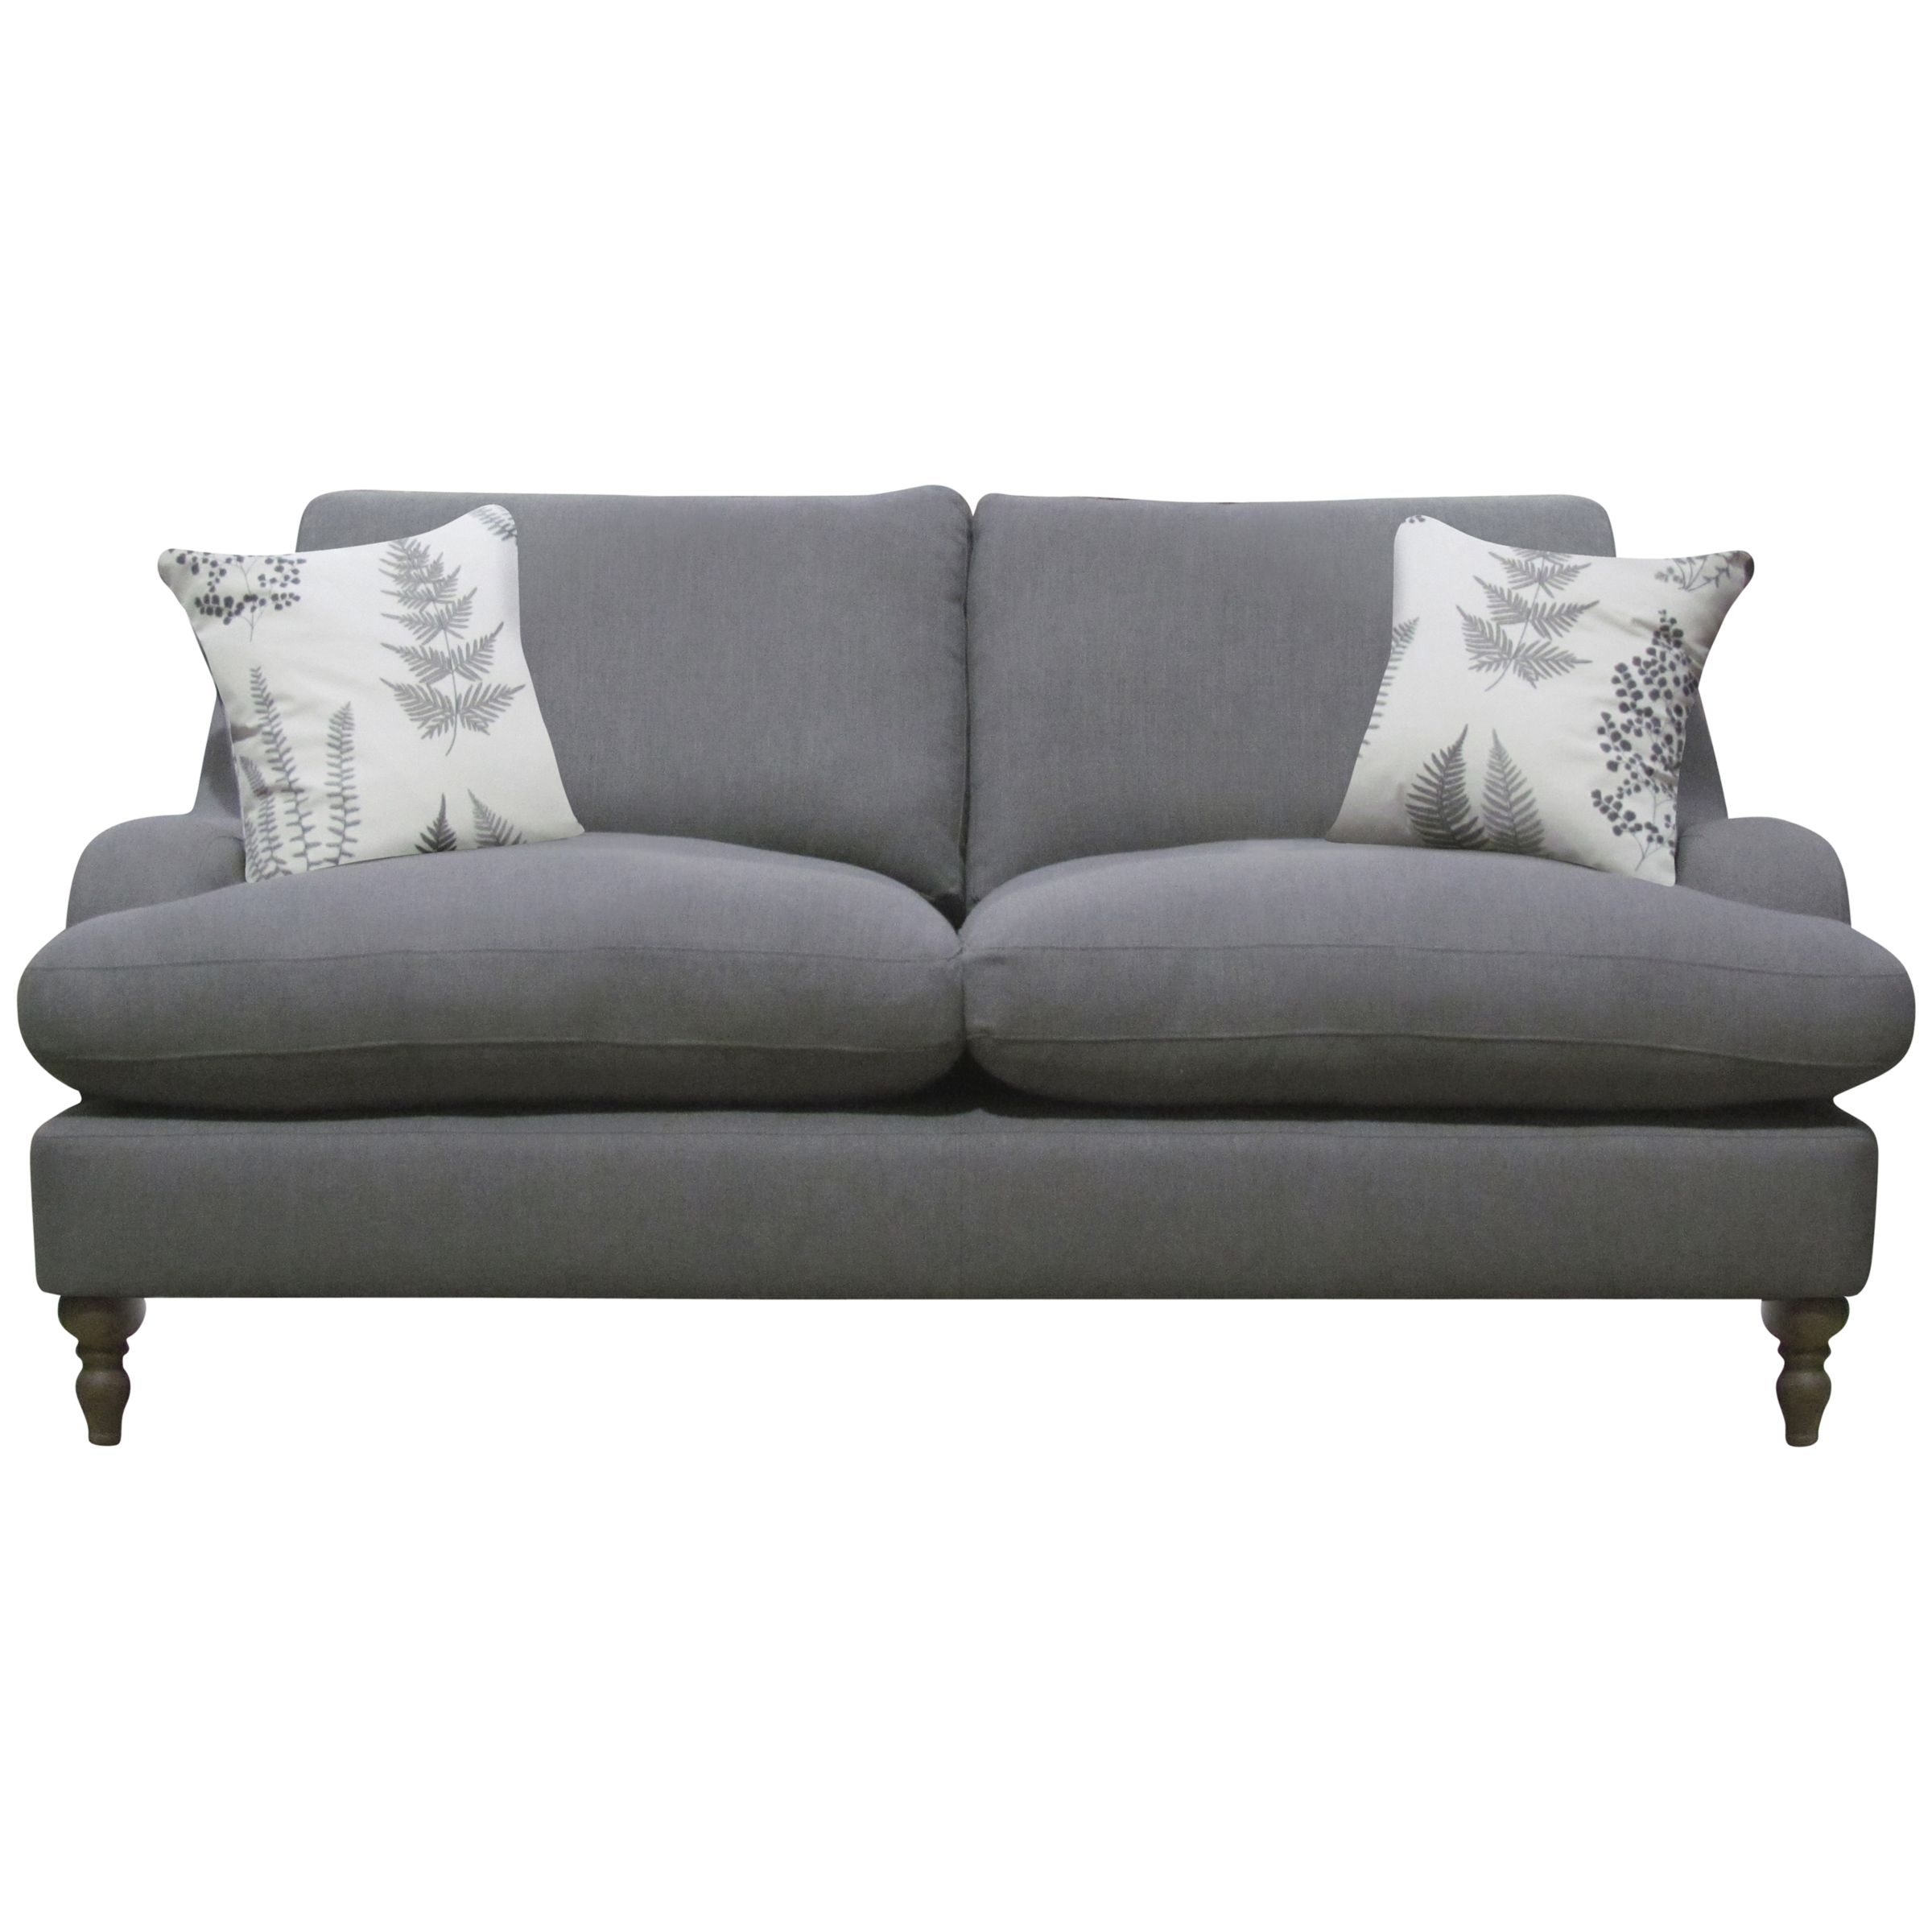 John Lewis Bracken Medium Sofa, Charcoal, width 171cm